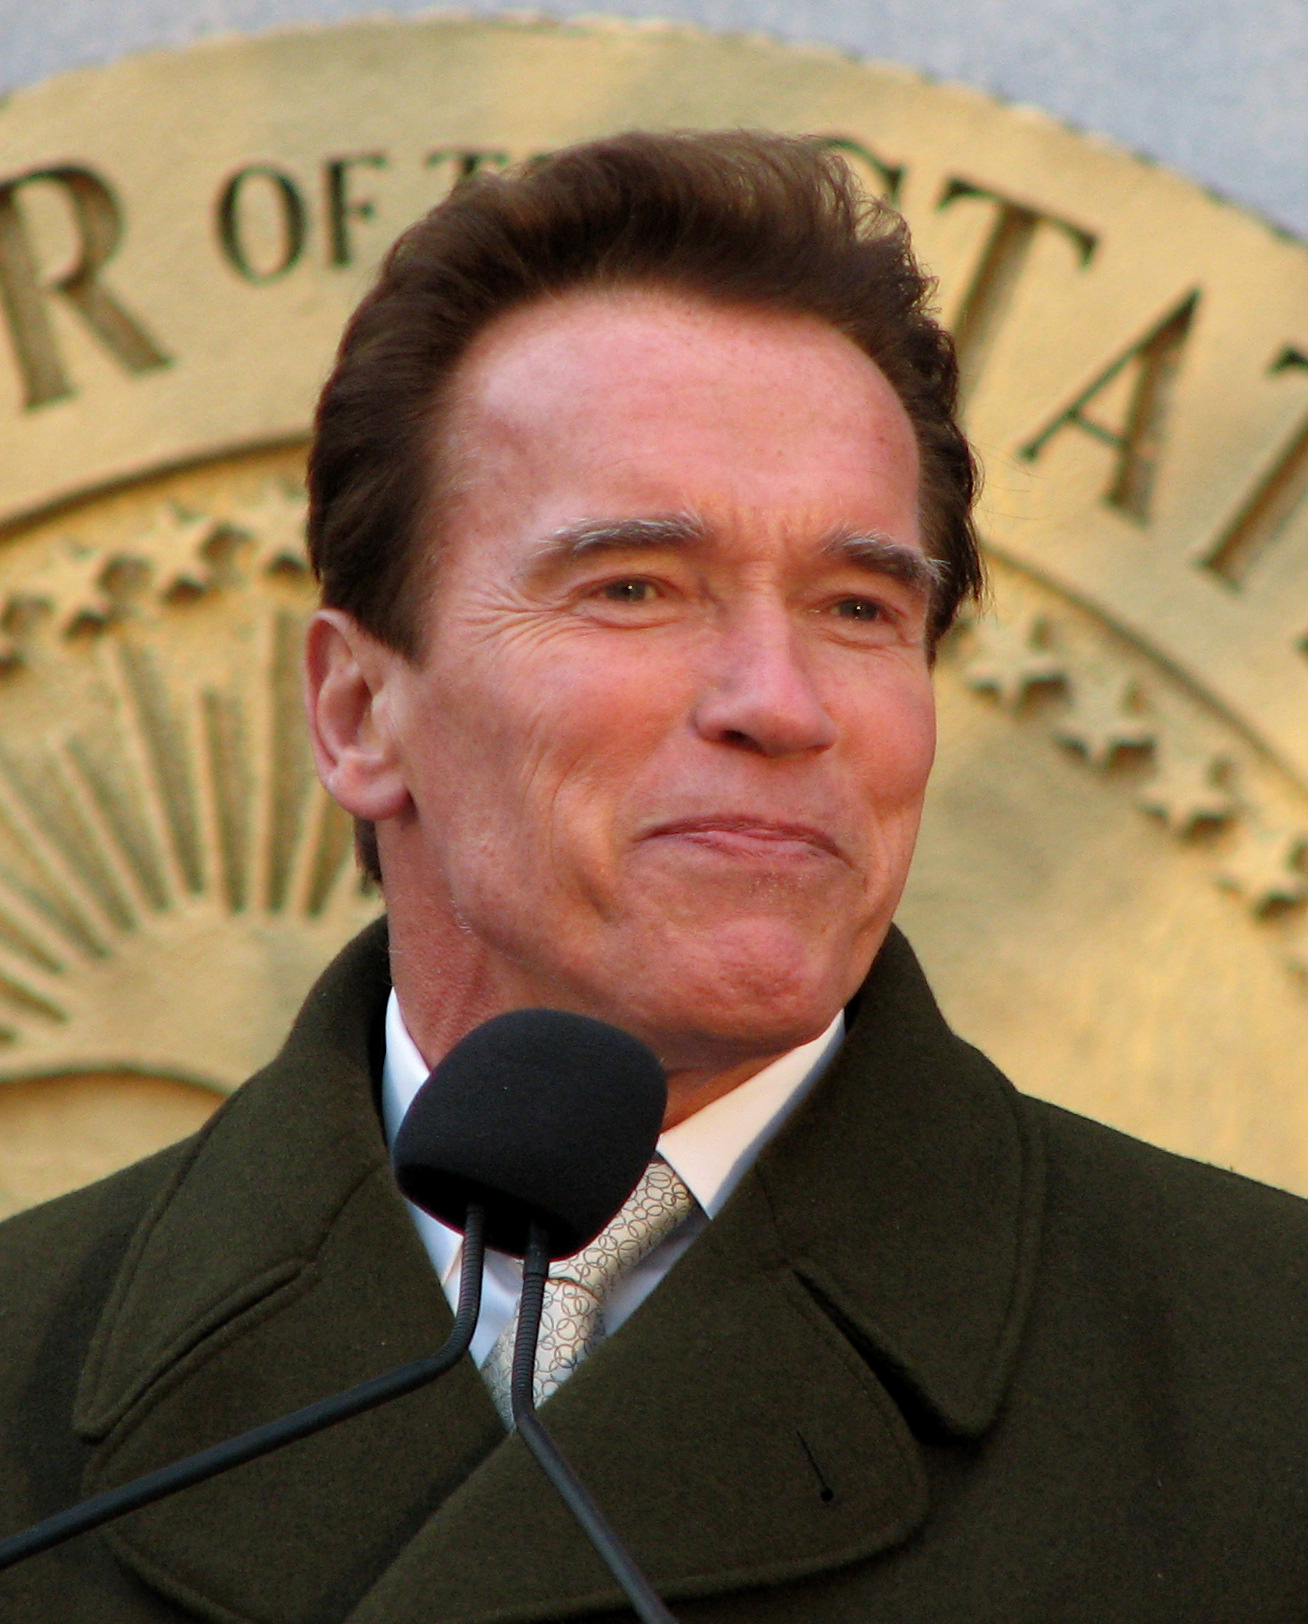 Arnold Schwarzenegger photo #84872, Arnold Schwarzenegger image